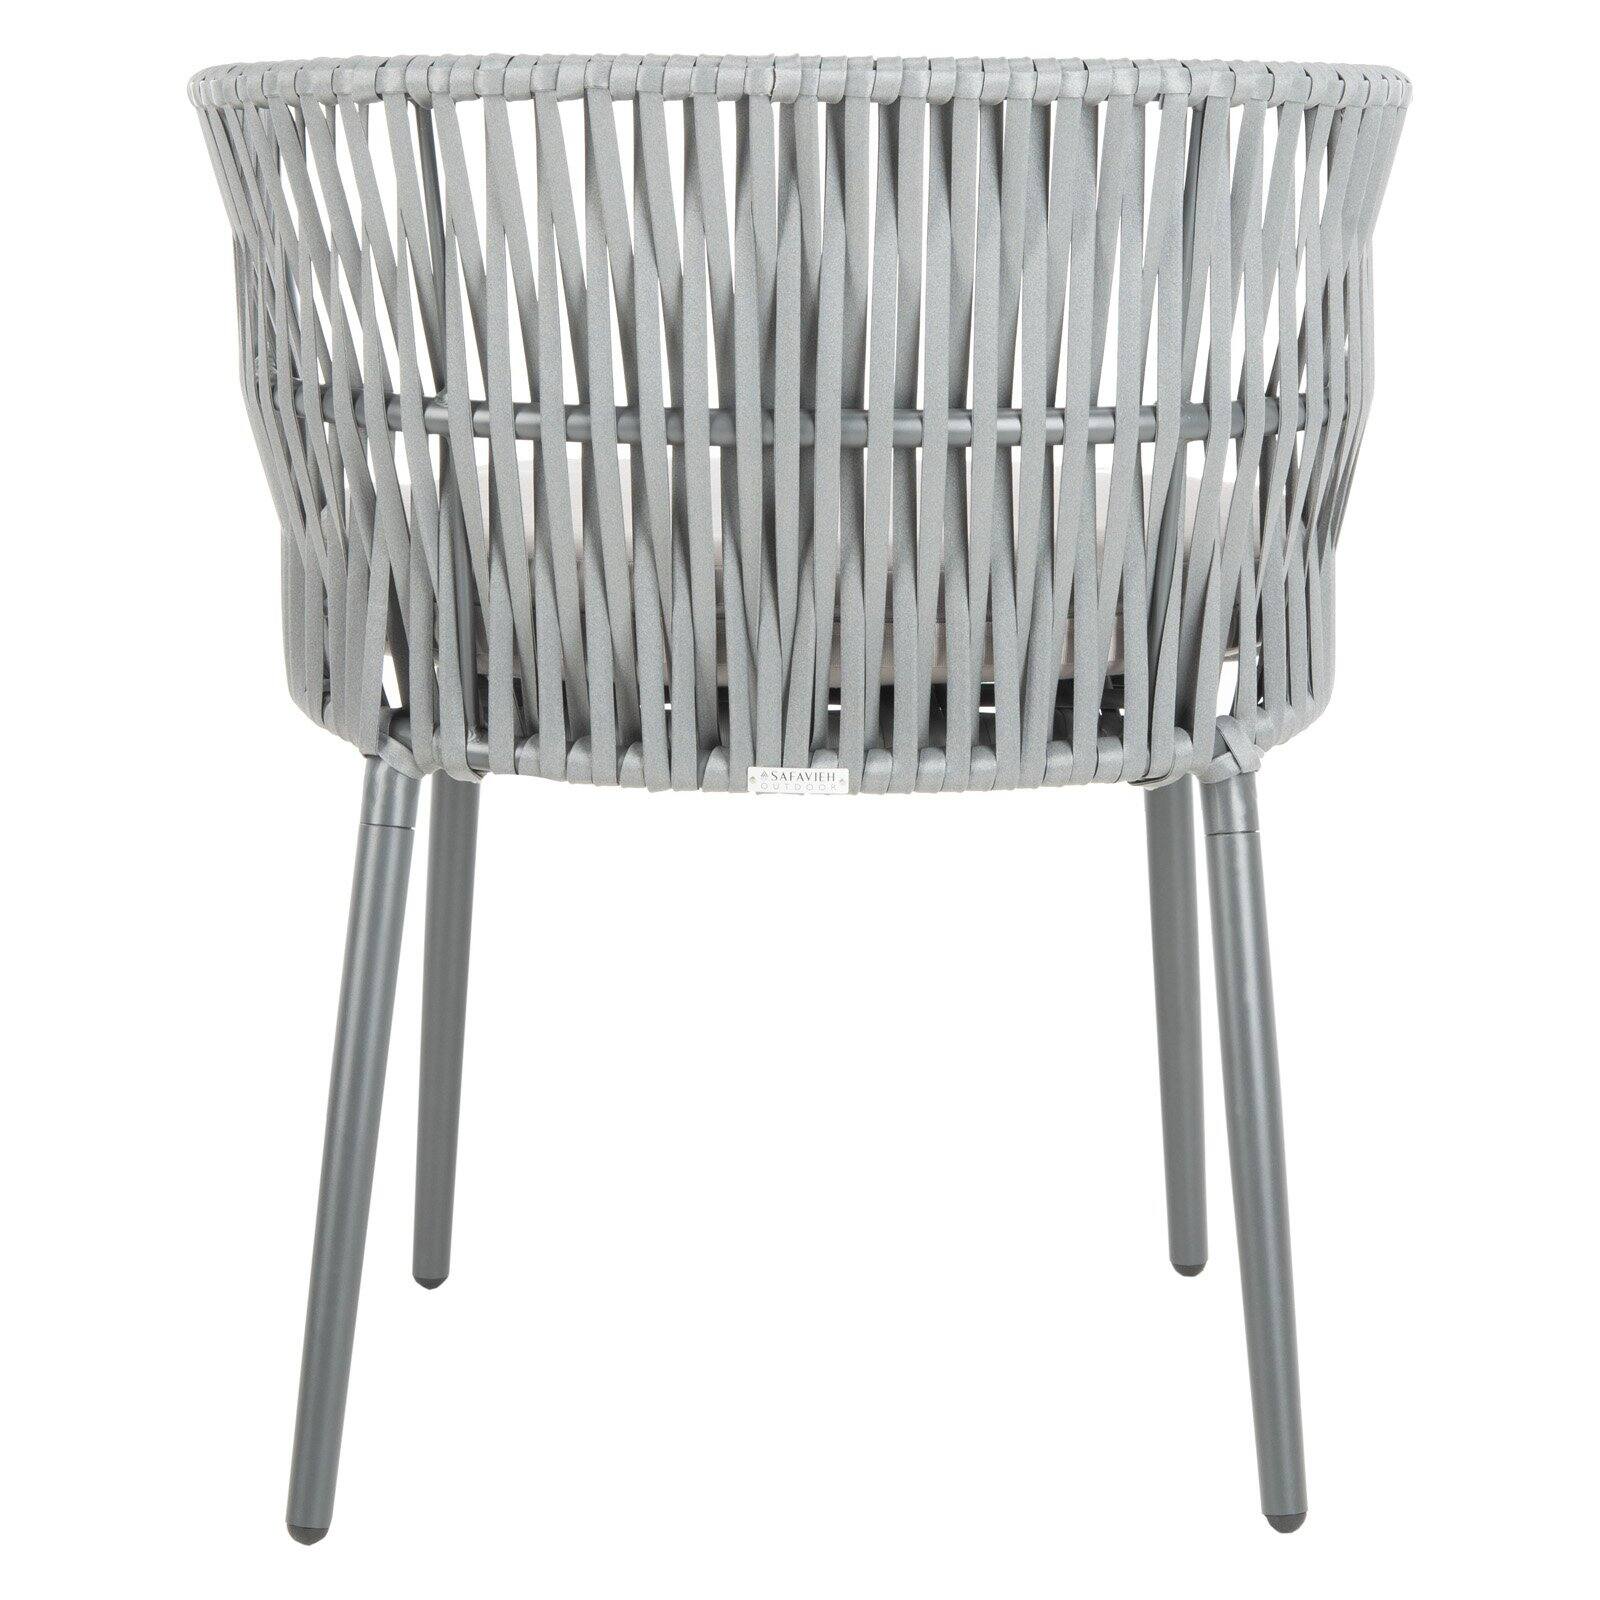 SAFAVIEH Kiyan Outdoor Patio Rope Chair, Grey/Cushion, Set of 2 - image 5 of 10